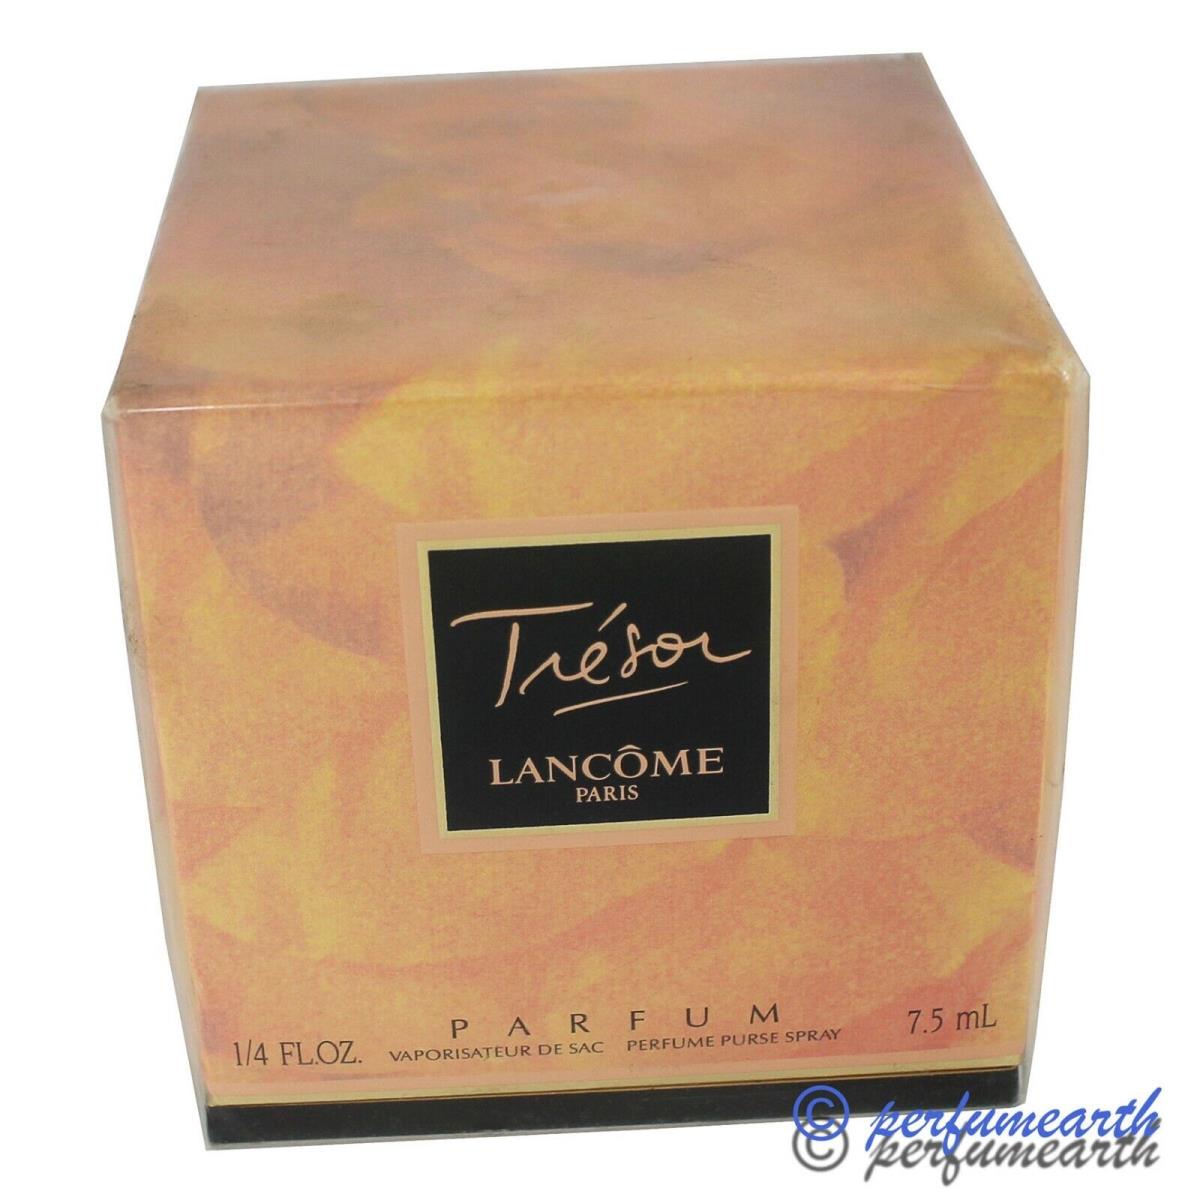 Tresor BY Lancome Parfum Purse Spray 1/4 OZ/7.5 ML For Women IN A Box